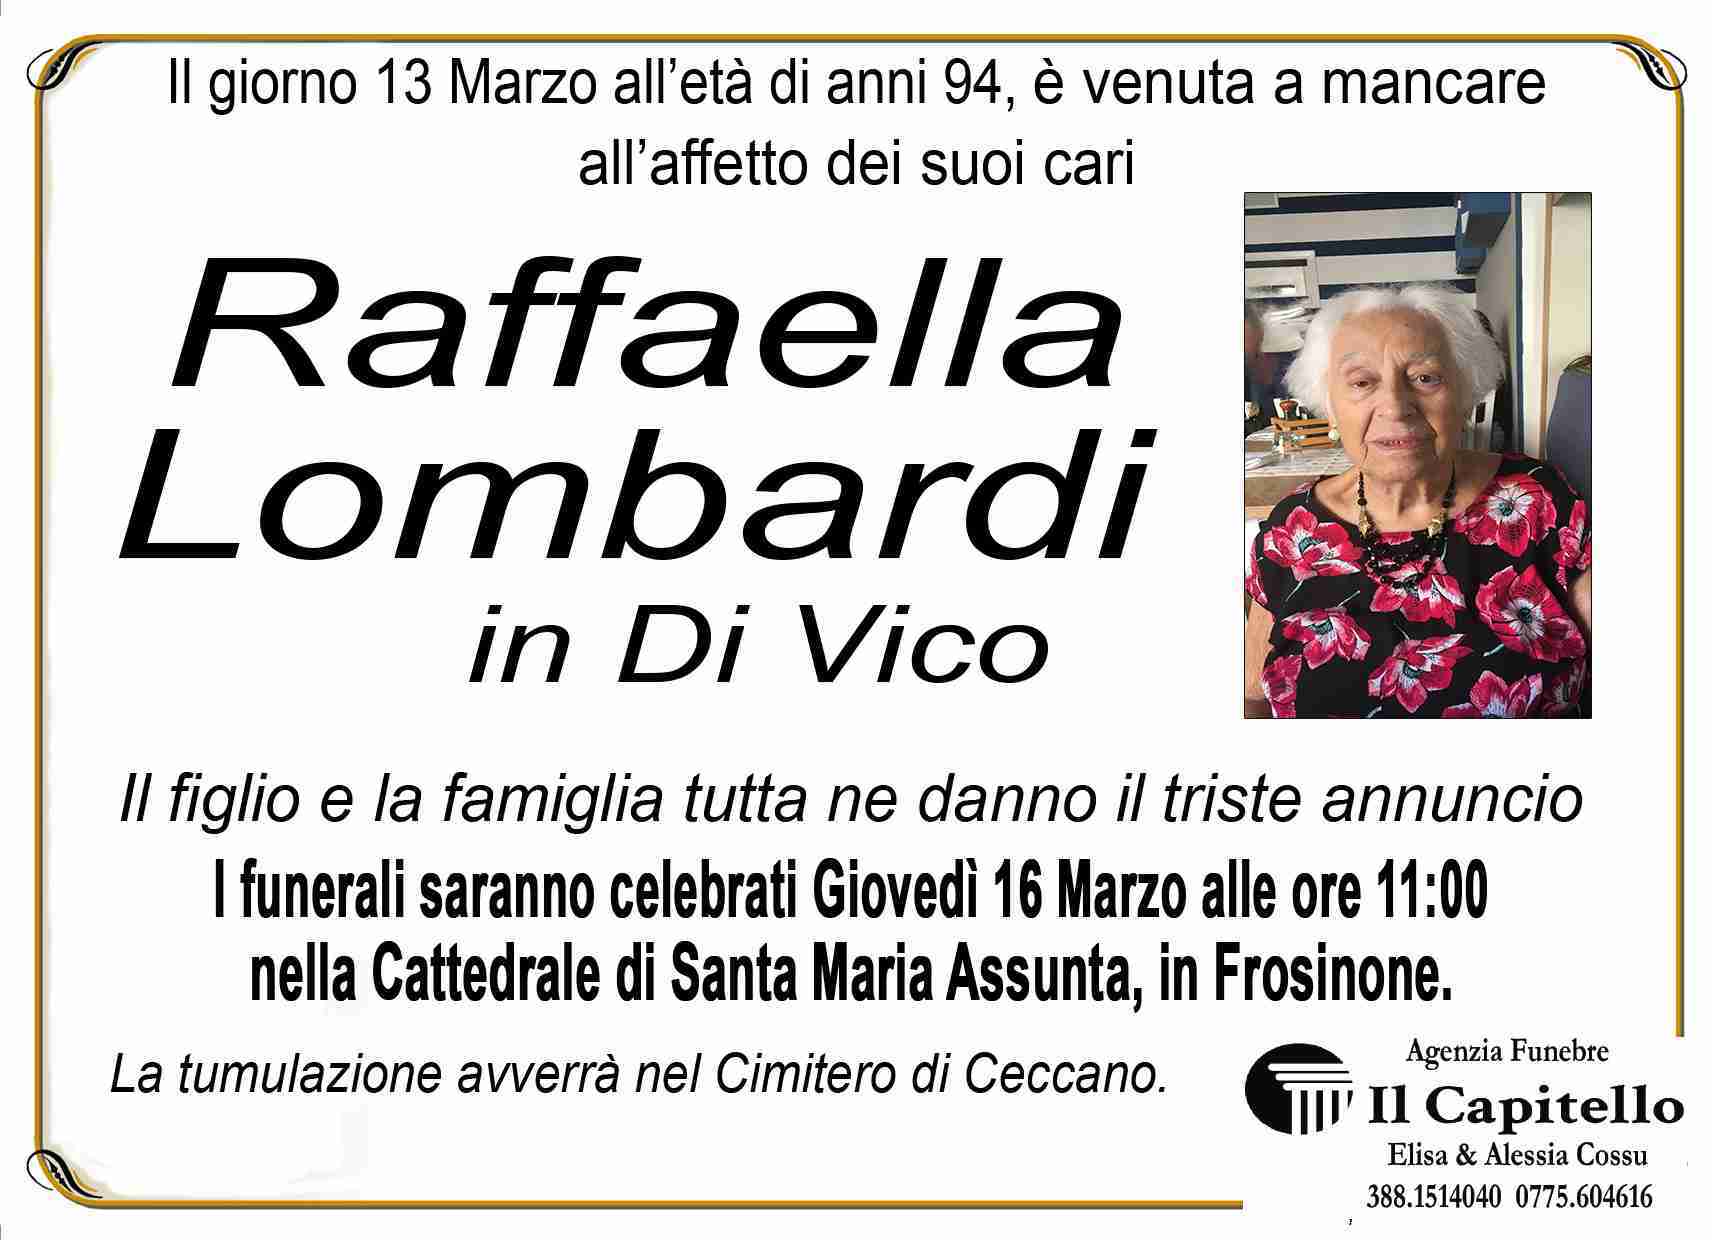 Raffaella Lombardi